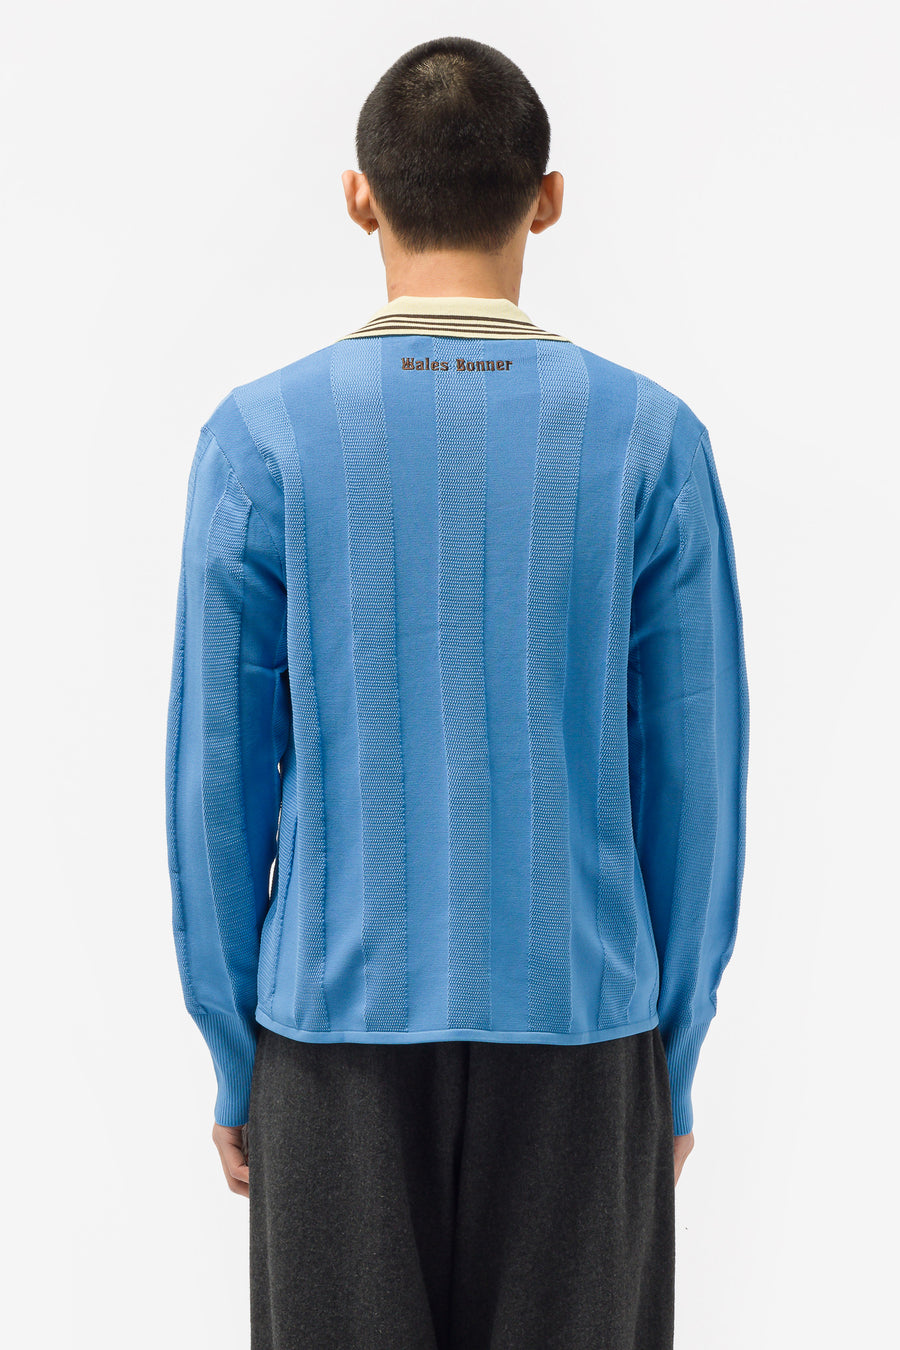 Wales Bonner Knit Football Long Sleeve Shirt in Lucky Blue